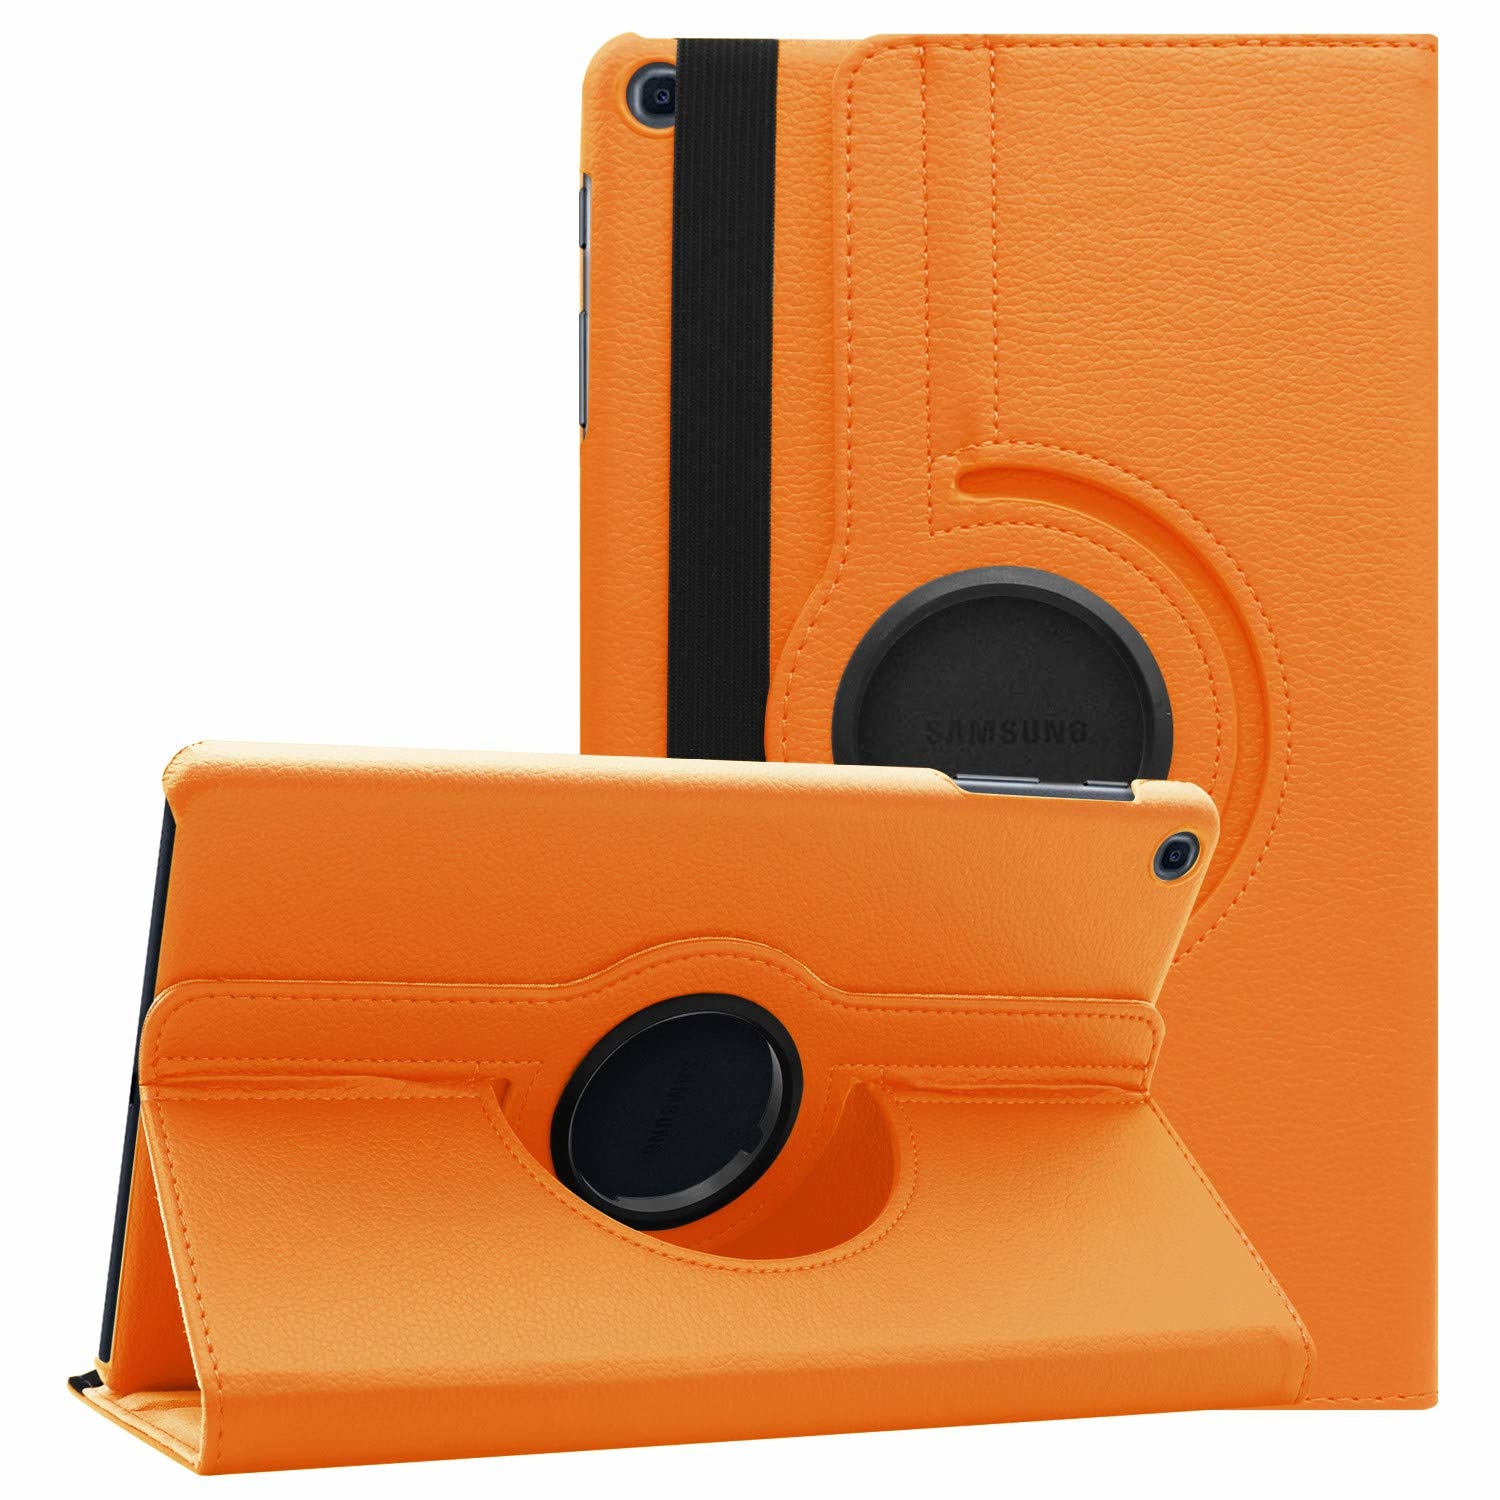 Samsung Galaxy Tab A 10.1 hoes - Draaibare Case - Oranje Case2go.nl